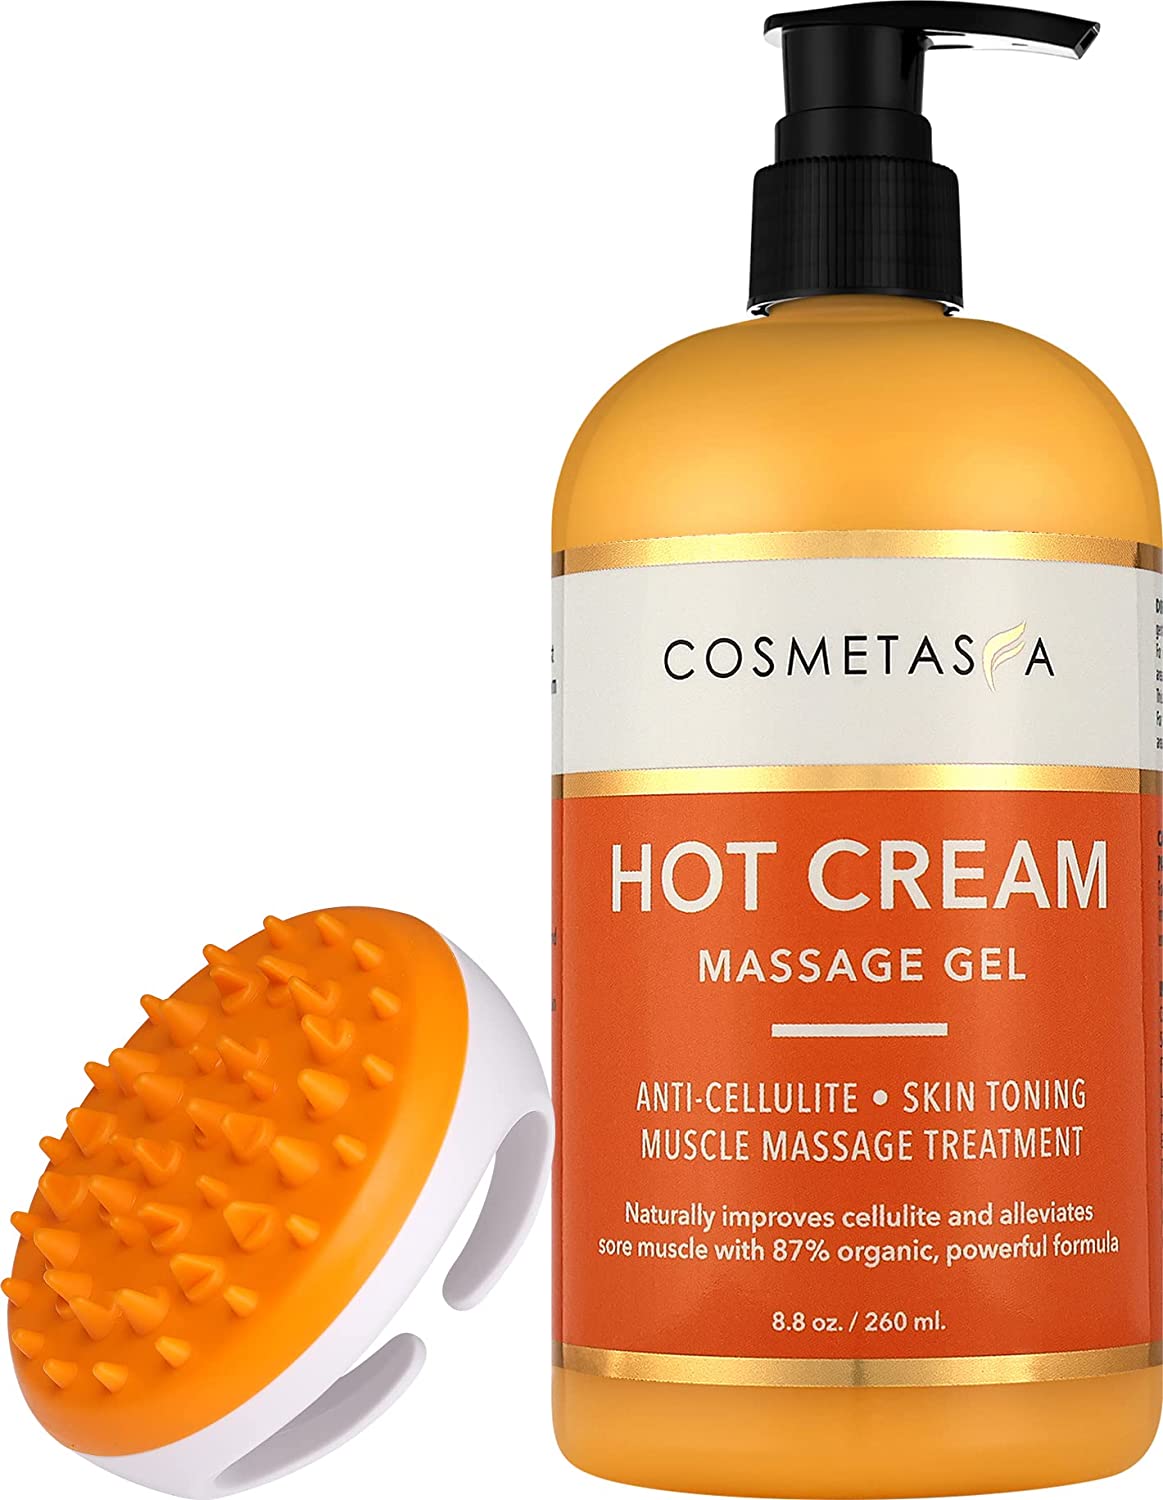 Cosmetasa Hot Cream Massage Gel with Massager Mitt- Natural and 87% Organic Cellulite Cream